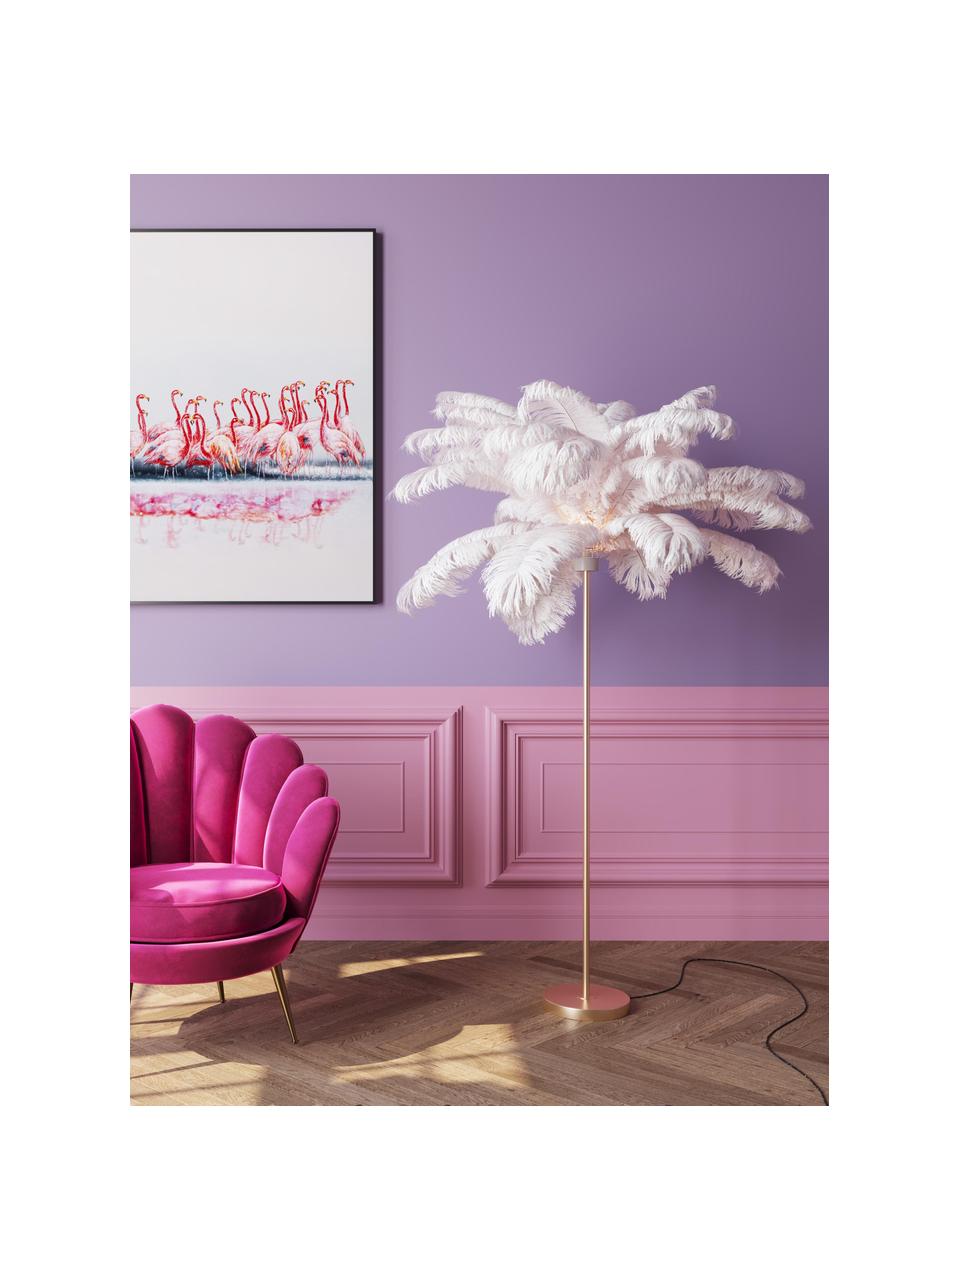 Vloerlamp Feather Palm, Lampenkap: struisvogelveren, Goudkleurig, wit, H 165 cm